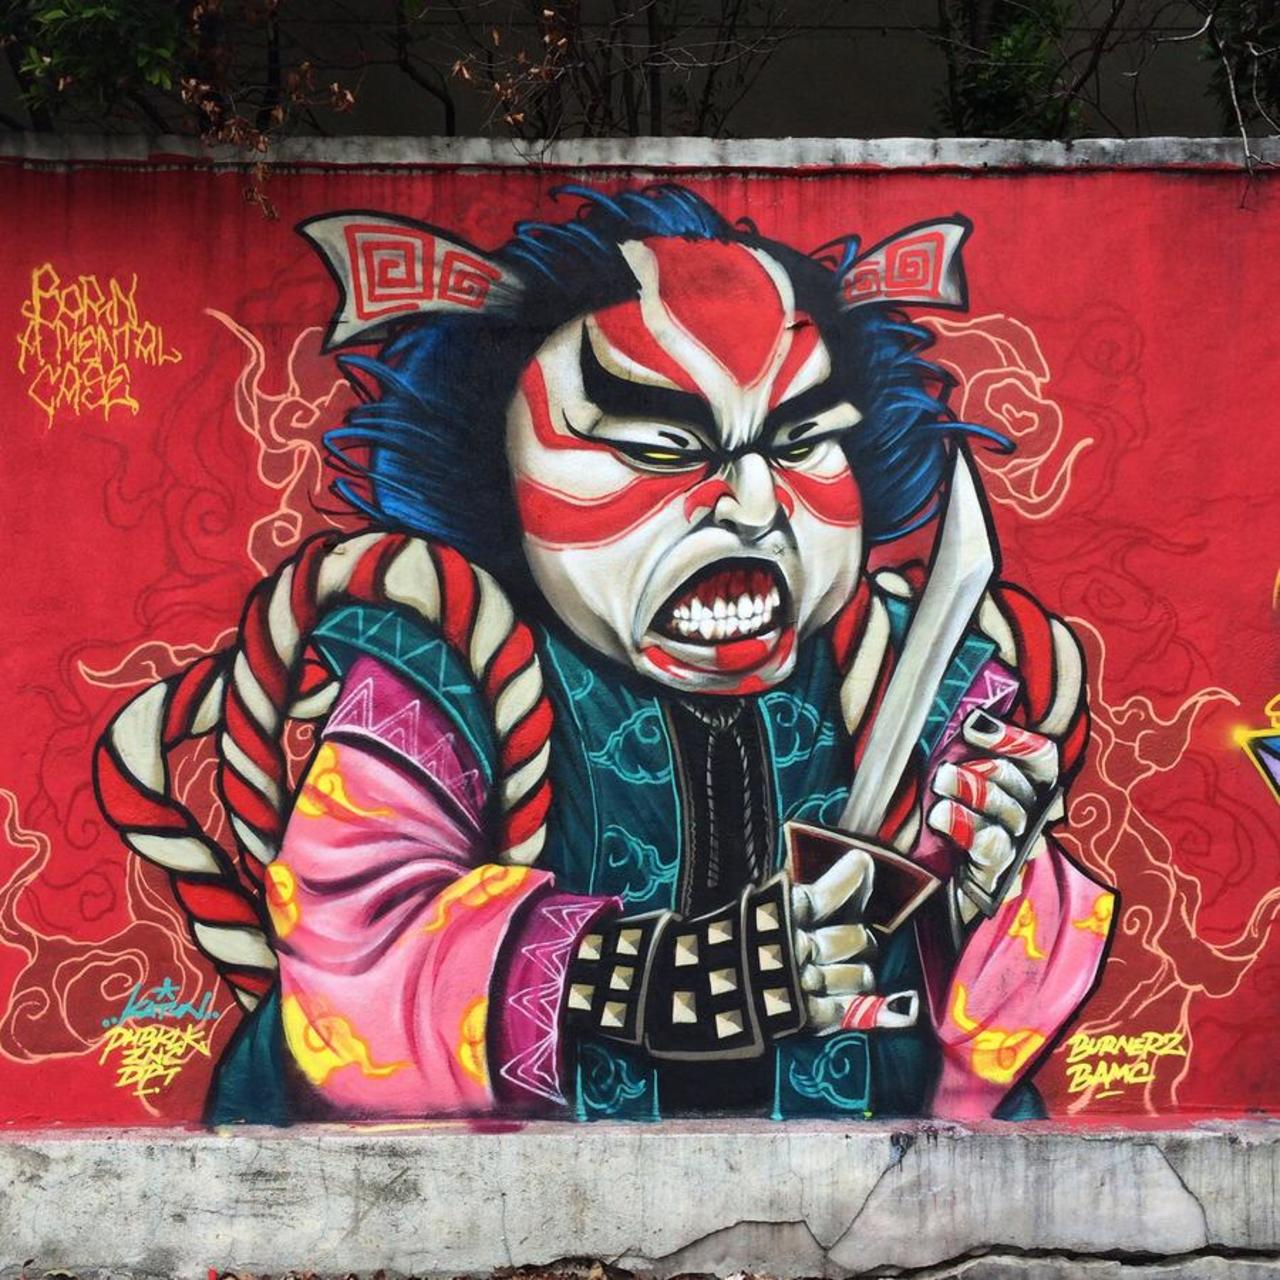 'Born A Mental Case' by Katun in Malaysia
http://blog.globalstreetart.com/post/131183358266/by-katun-in-malaysia
#streetart #mural #urbanart #graffiti #samurai http://t.co/MtF0P9gtEM